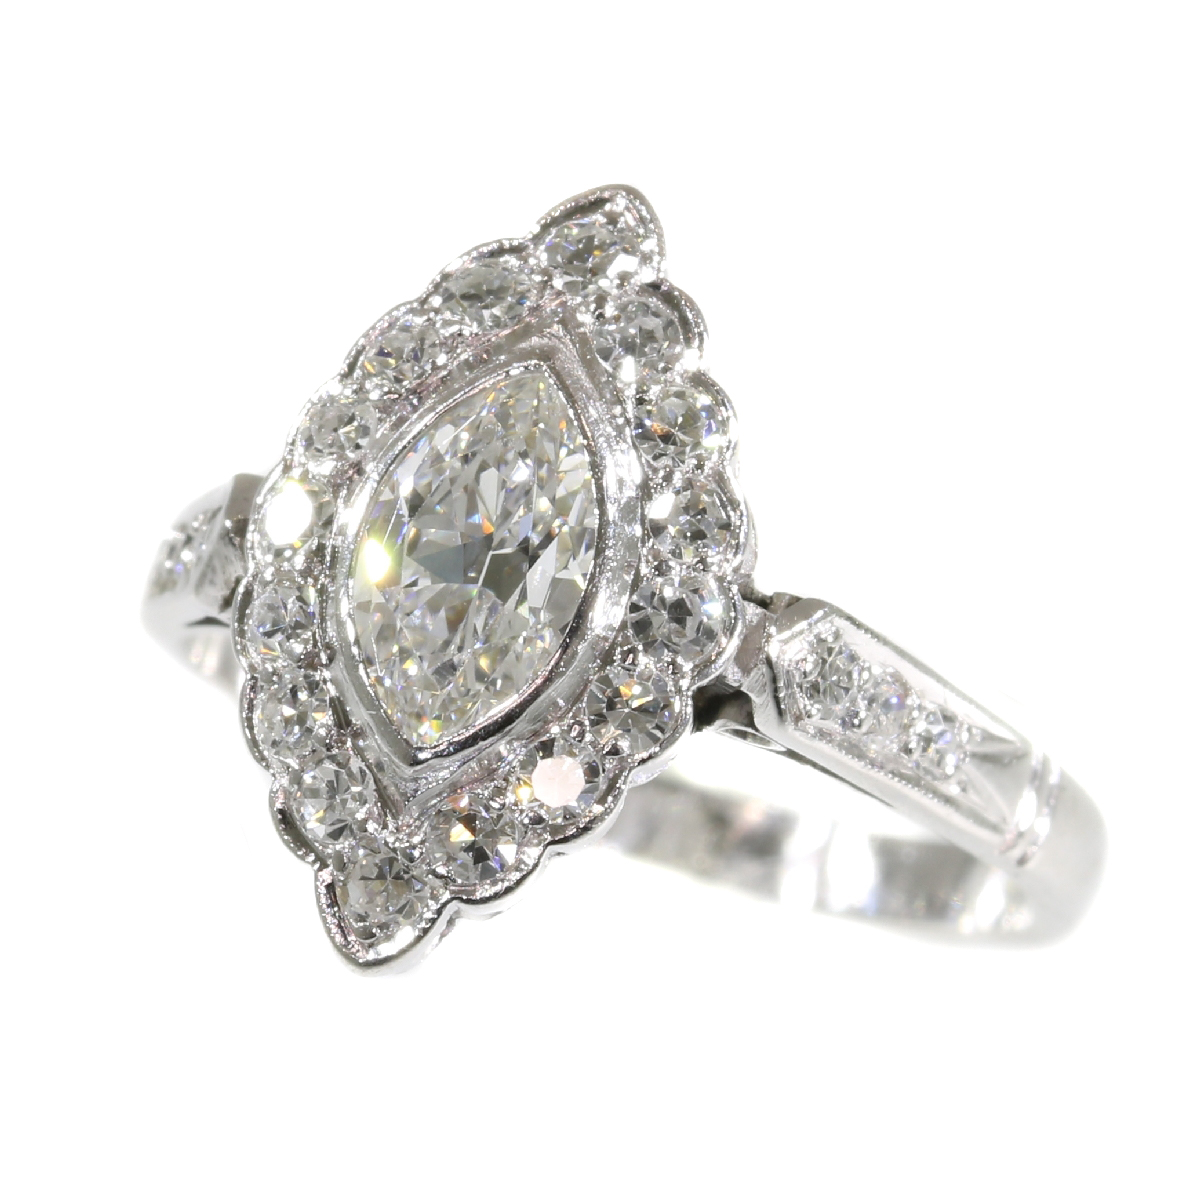 Vintage Fifties platinum engagement ring with diamonds